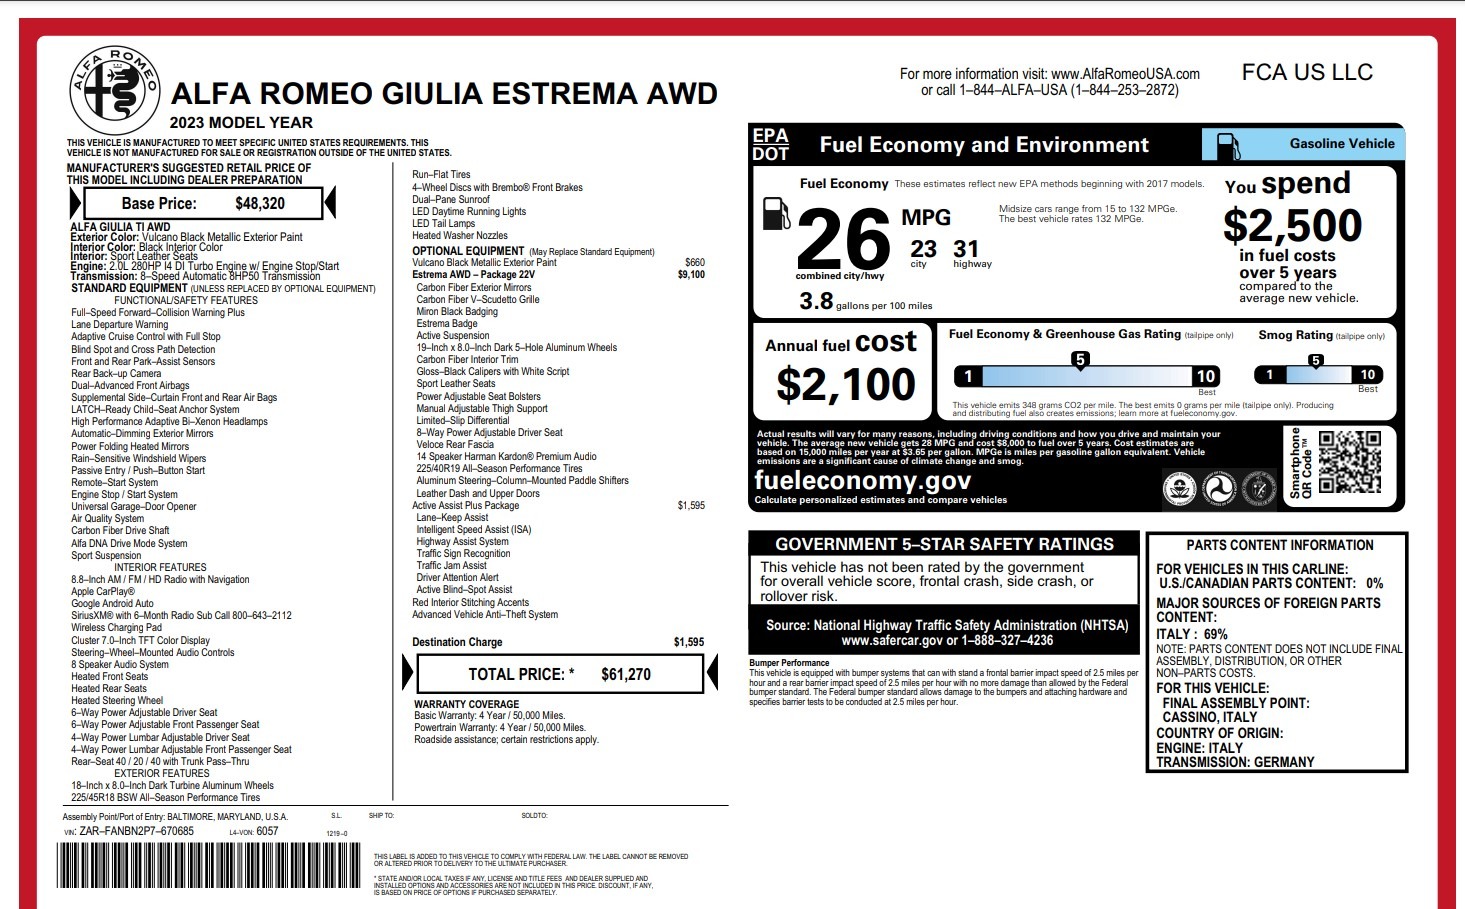 New 2023 Alfa Romeo Giulia Estrema